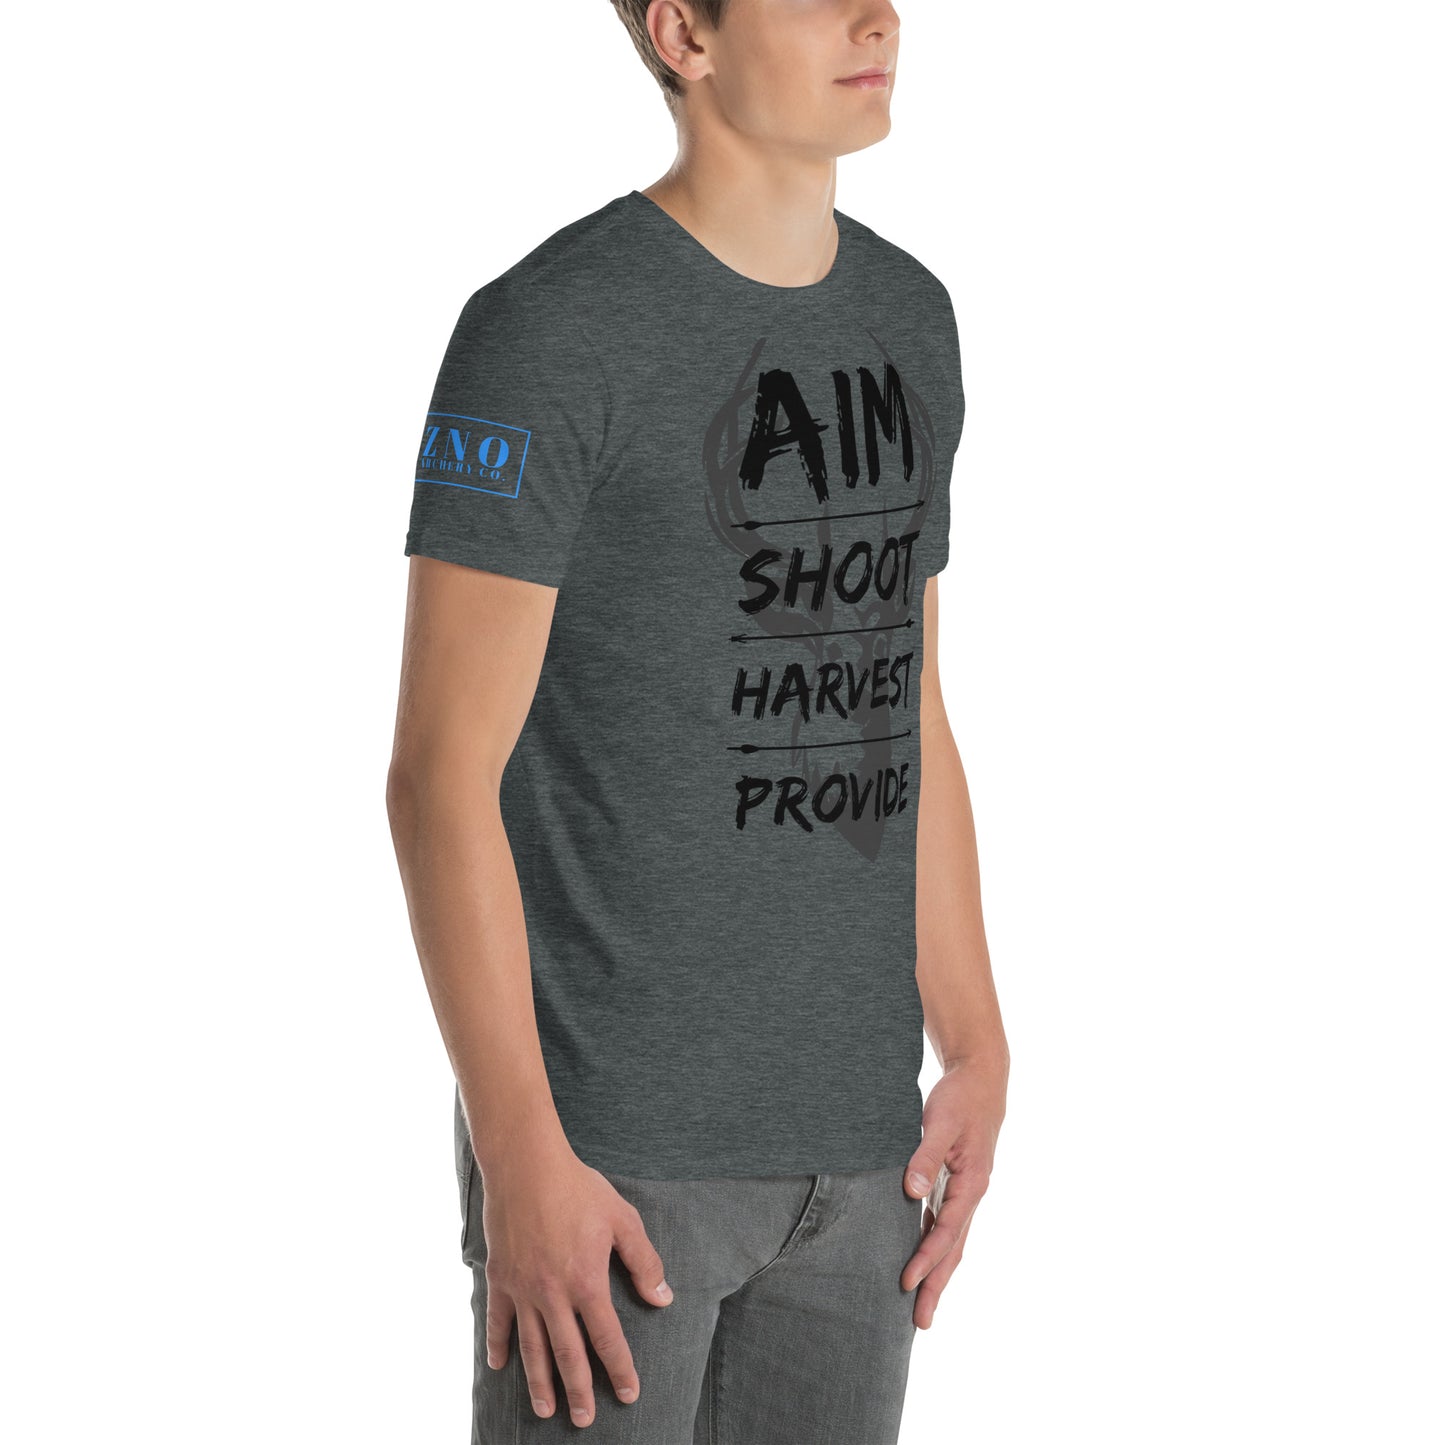 "Provide" Short-Sleeve Unisex T-Shirt